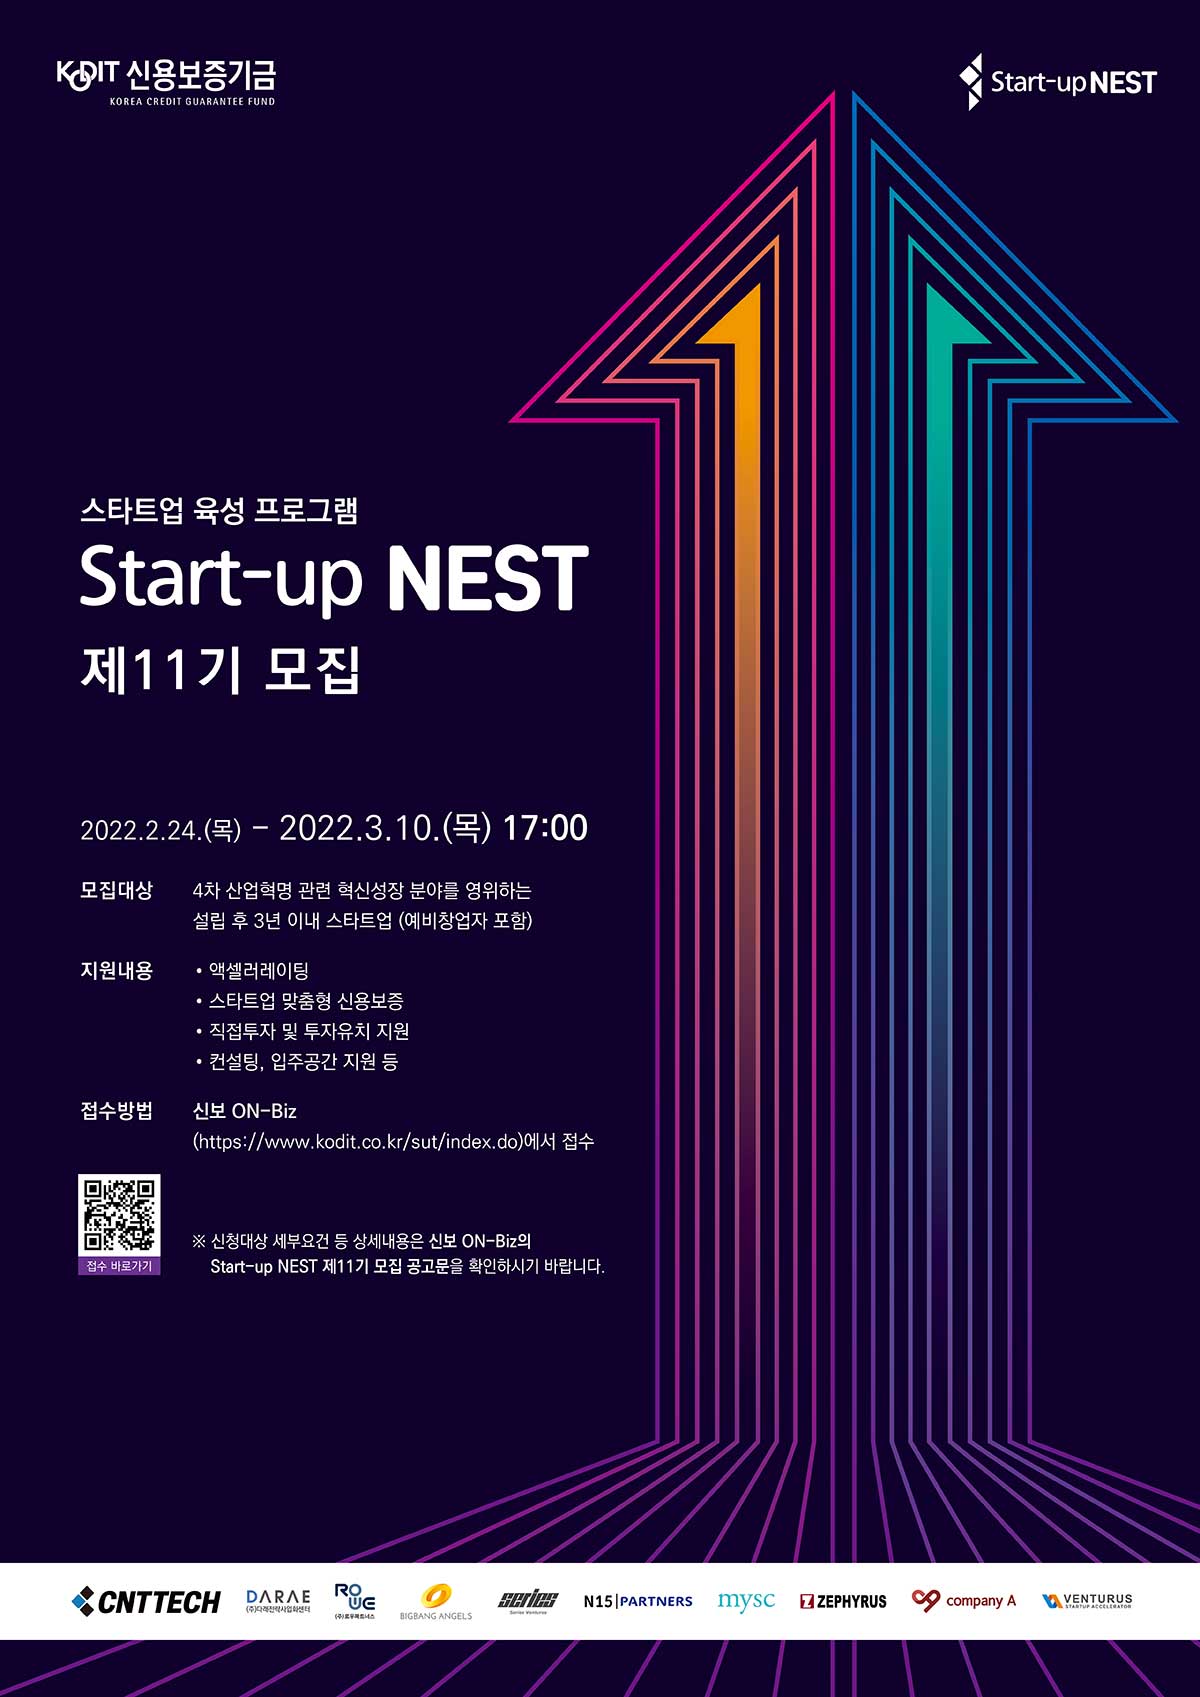 KODIT 신용보증기금(KOREA CREDIT GUARANTEE FUND)  _ Start-up NEST _ 스타트업 육성 프로그램 Start-up NEST 제11기 모집 _ 2022.2.24.(목) - 2022.3.10.(목) 17:00 _ 모집대상 : '4차 산업혁명 관련 혁신성장 분야를 영위하는 '설립 후 3년 이내 스타트업 (예비창업자 포함) _ 지원내용 • 액셀러레이팅 • 스타트업 맞춤형 신용보증 • 직접투자 및 투자유치 지원 • 컨설팅, 입주공간 지원 등 _ 접수방법 : 신보 ON-Biz (https://www.kodit.co.kr/sut/index.do)에서 접수 ※ 신청대상 세부요건 등 상세내용은 신보 ON-Biz의 Start-up NEST 제11기 모집 공고문을 확인하시기 바랍니다. (관련기업 CNTTECH,DARAE,ROUE,Series,N15|Partners,mysc,ZEPHYRUS,company A,venturus)